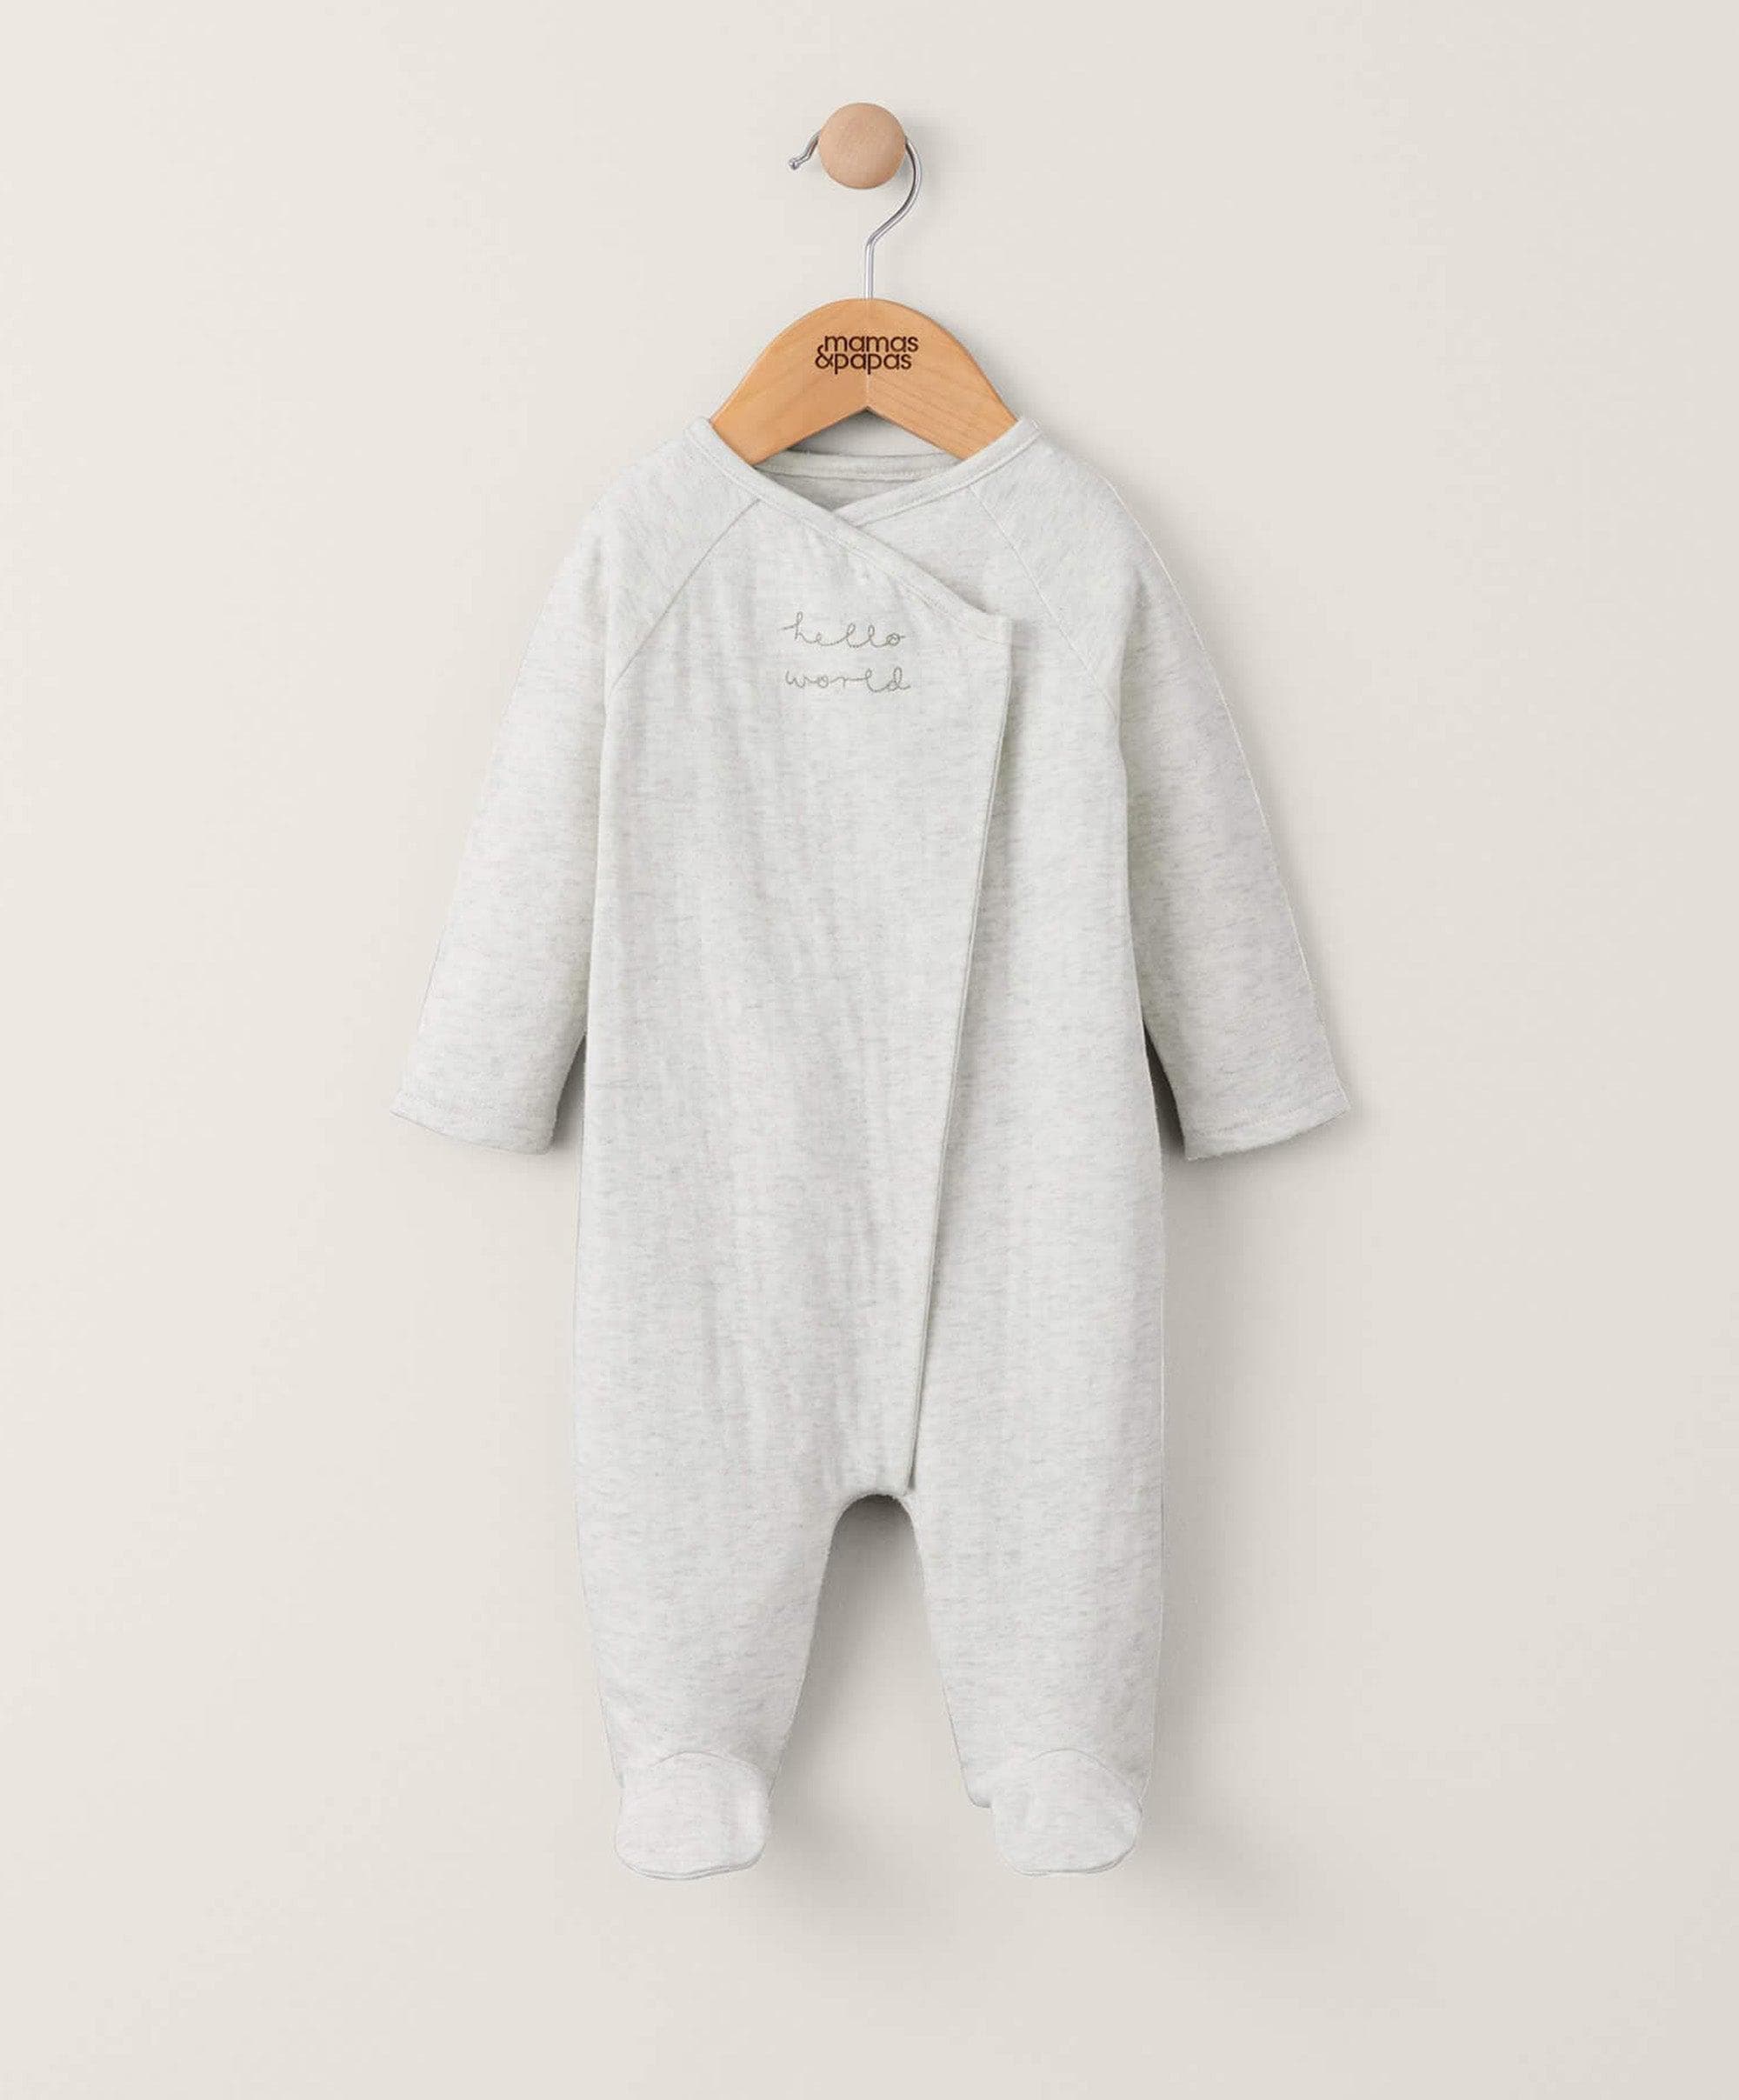 Hello World Embroidered Sleepsuit - Grey